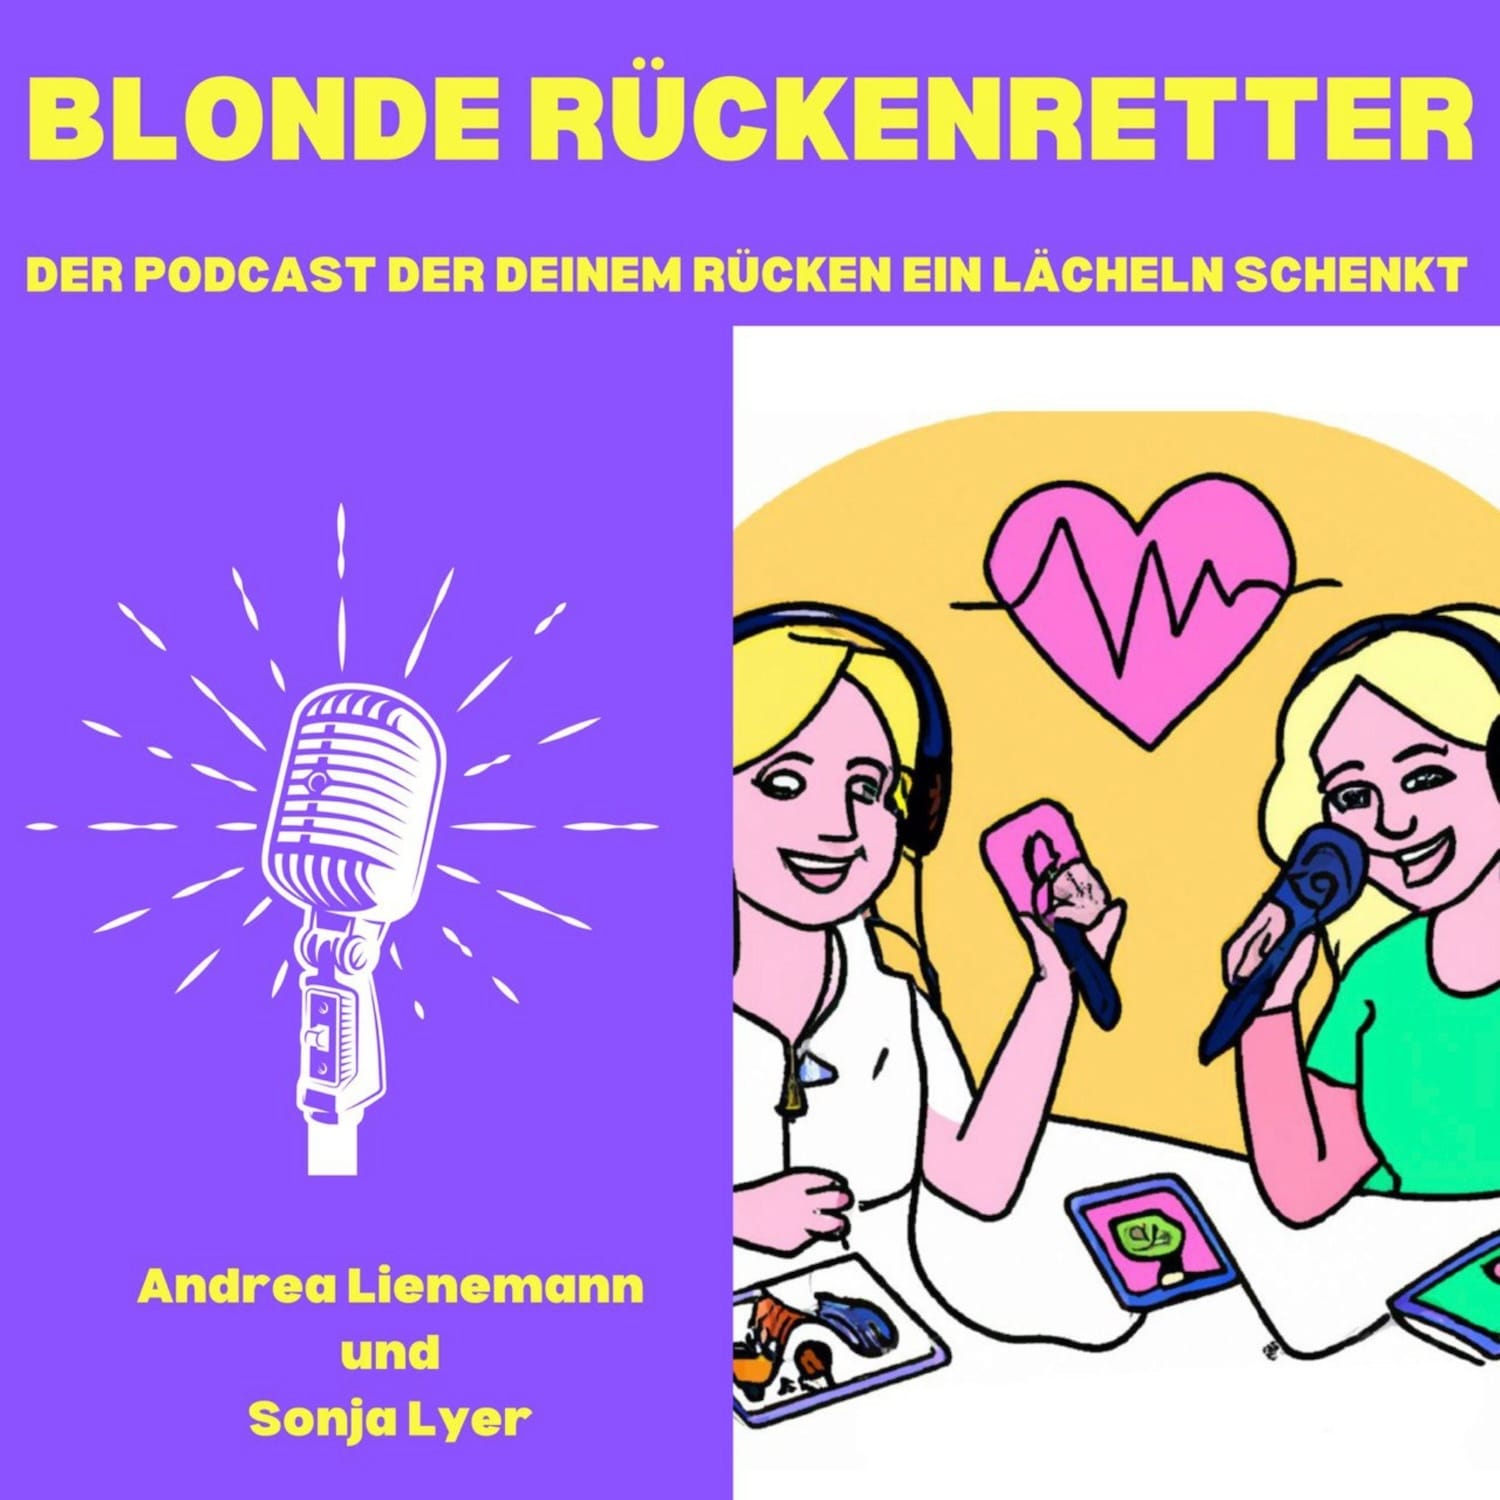 Podcast Blonde Rückenretter